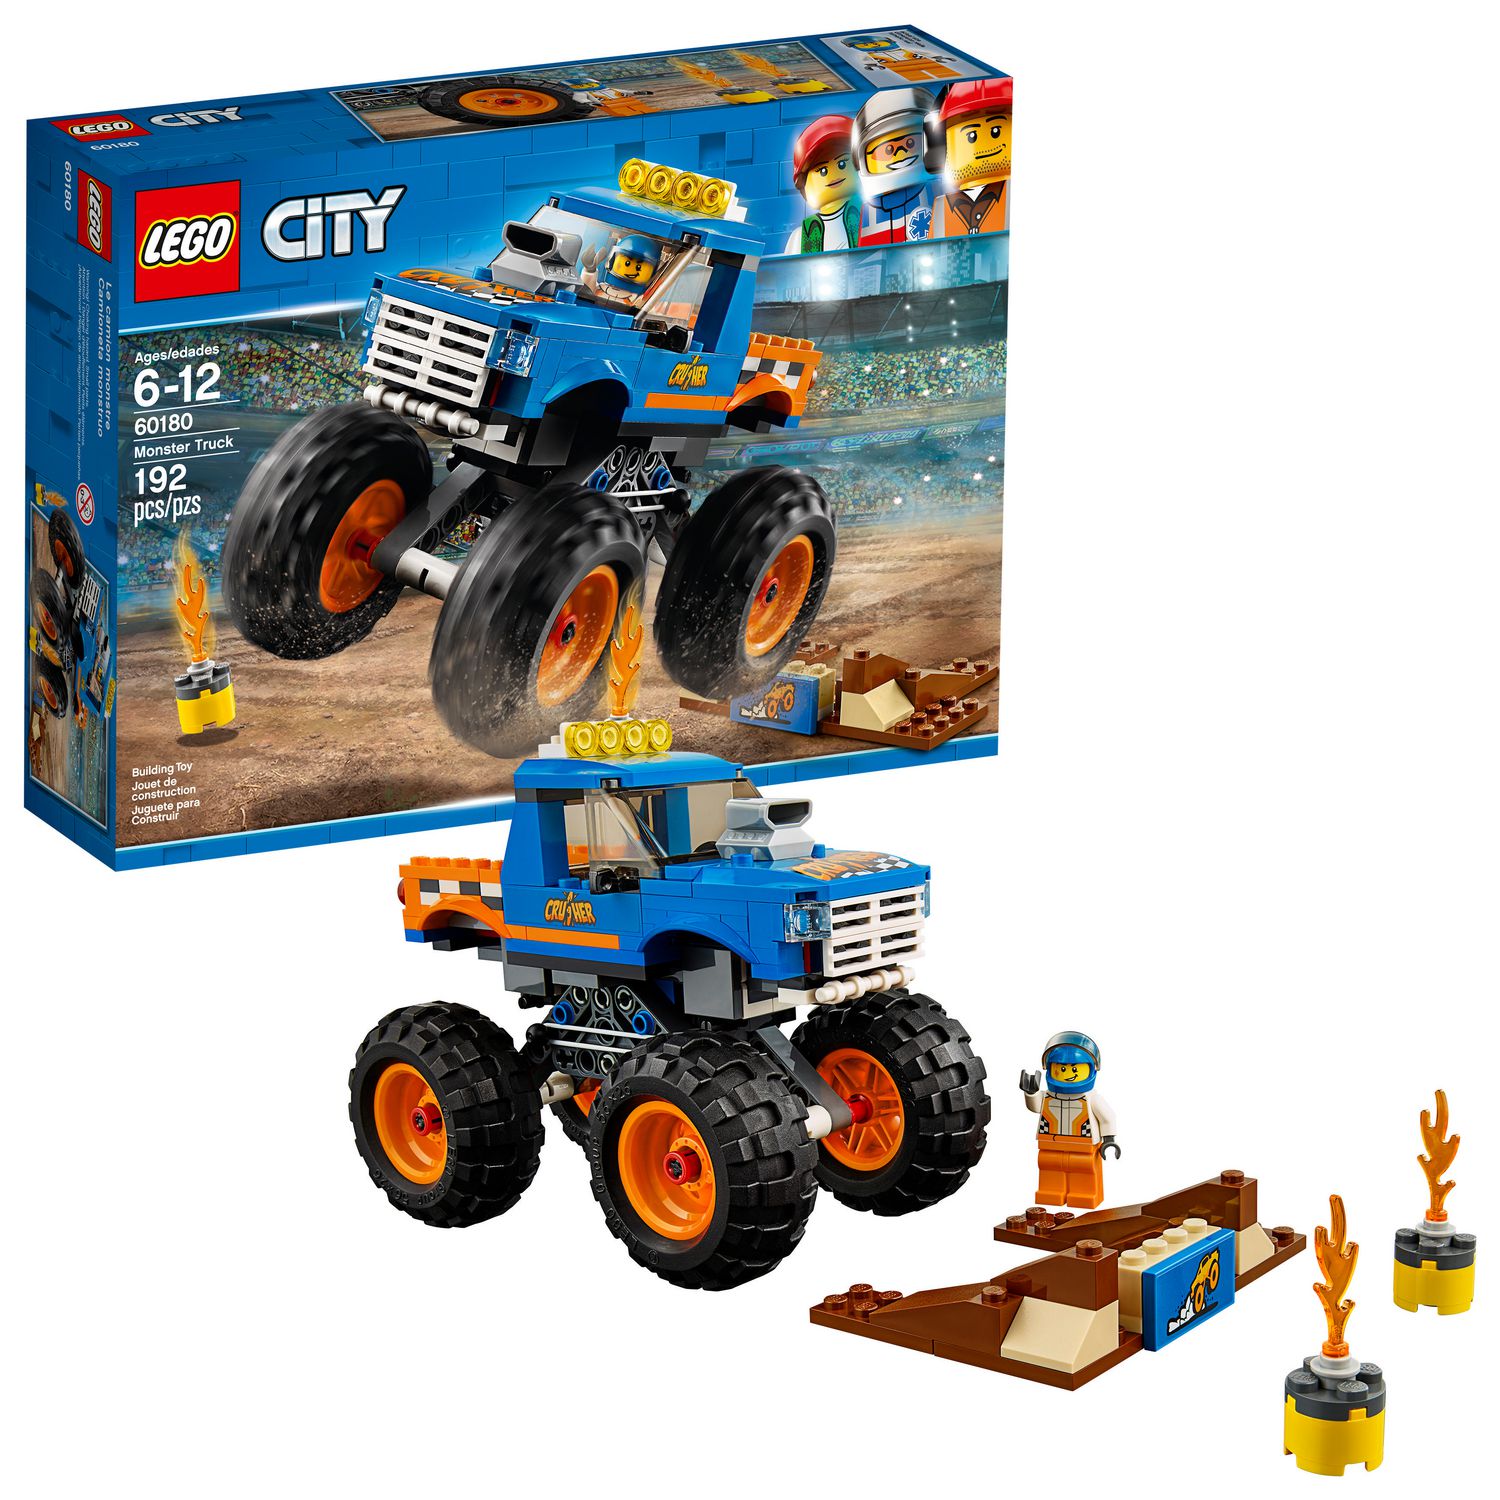 Lego City Monster Truck Building Block 